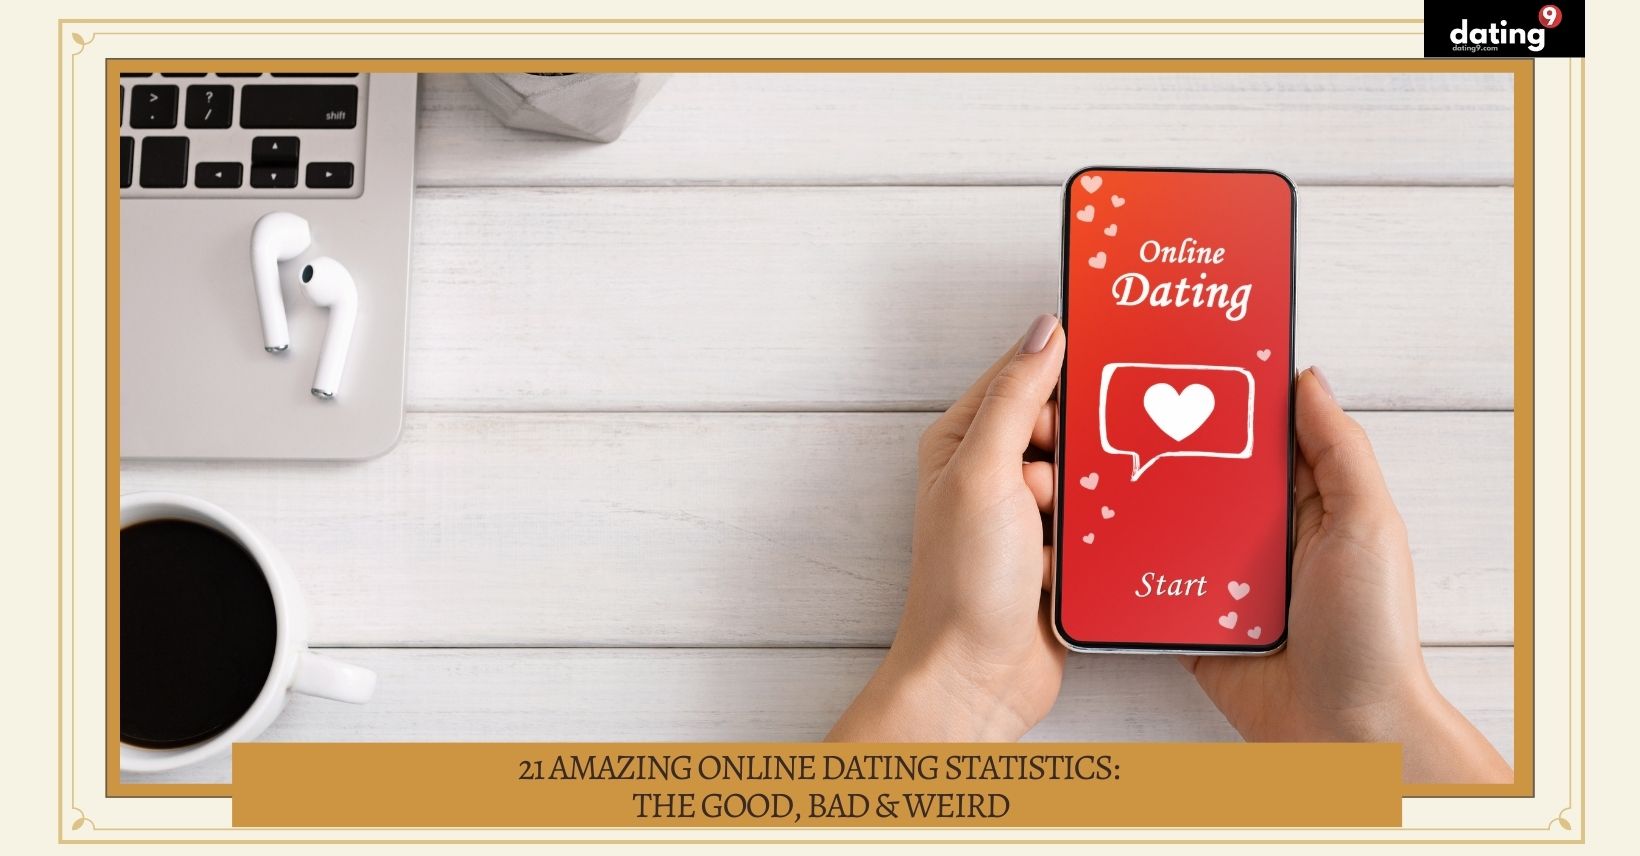 Amazing Online Dating Statistics: The Good, Bad & Weird